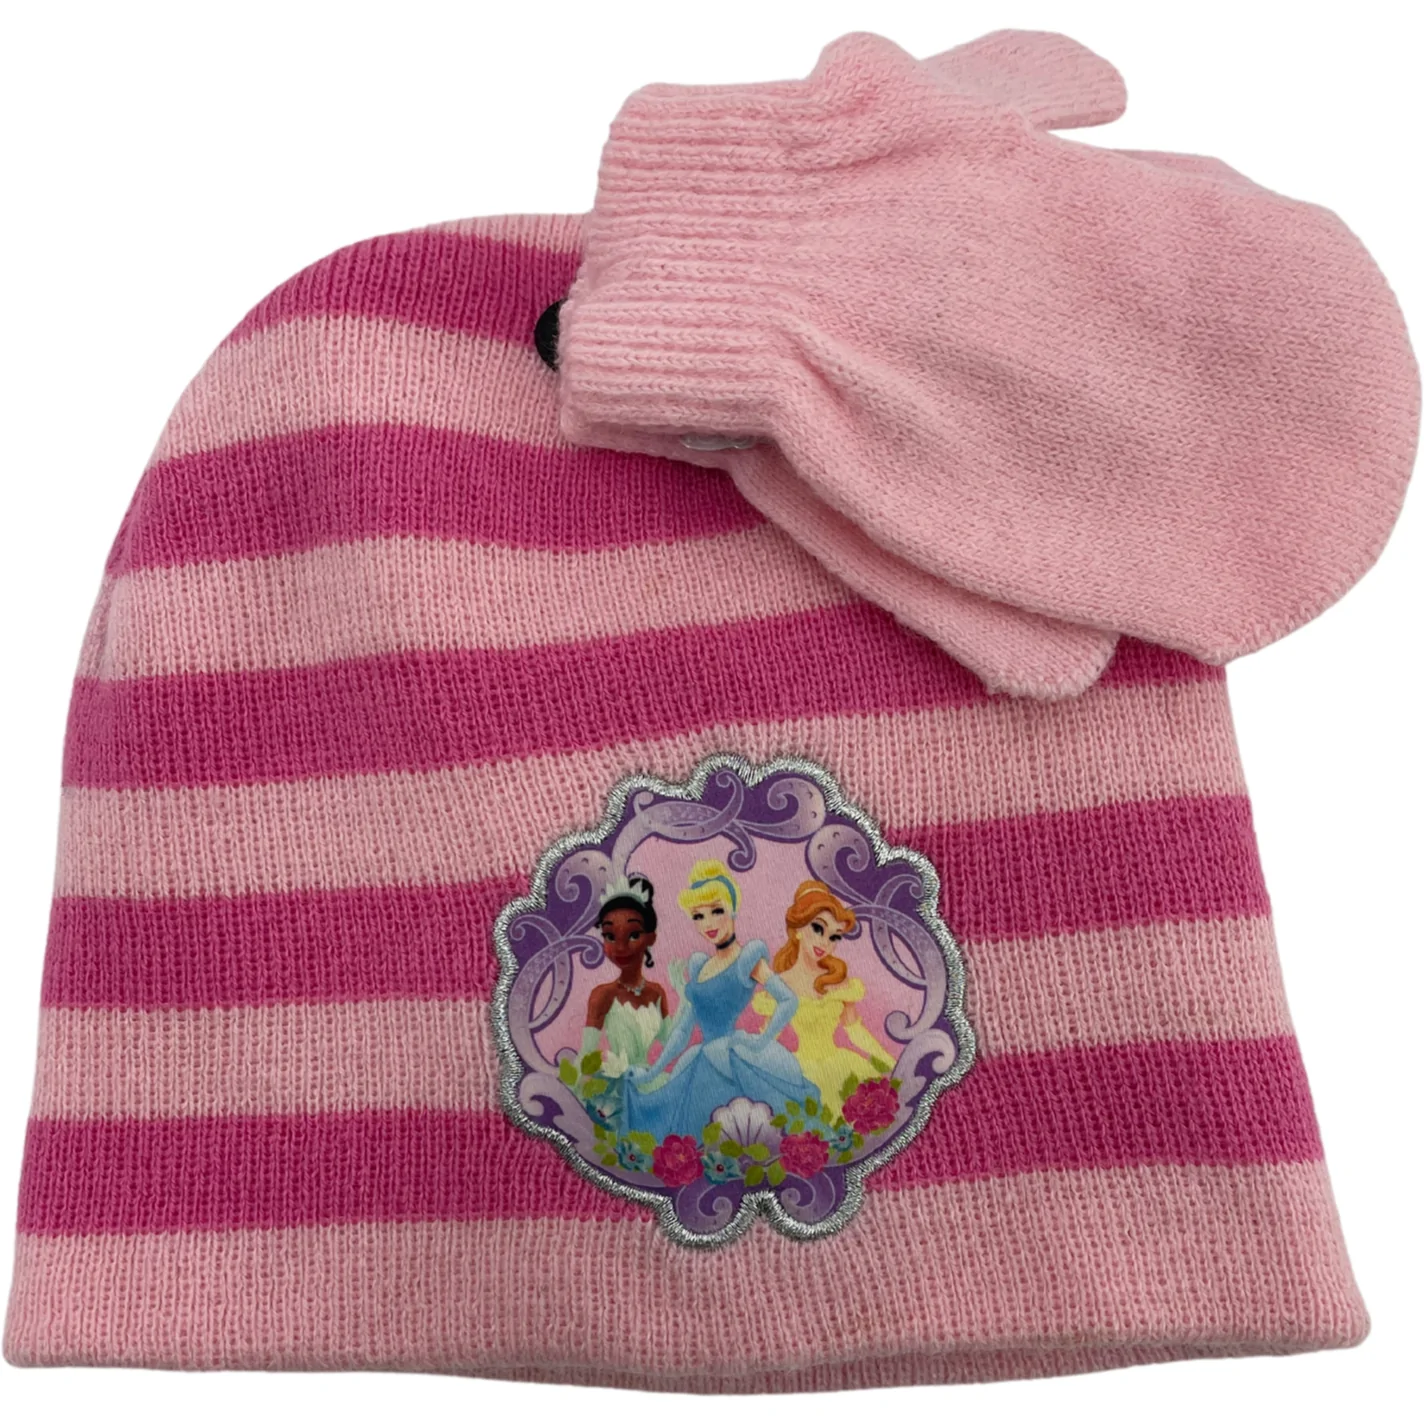 Children's Winter Hat & Mitten Set / Disney Princess / Pink / Girl's Toques / One Size